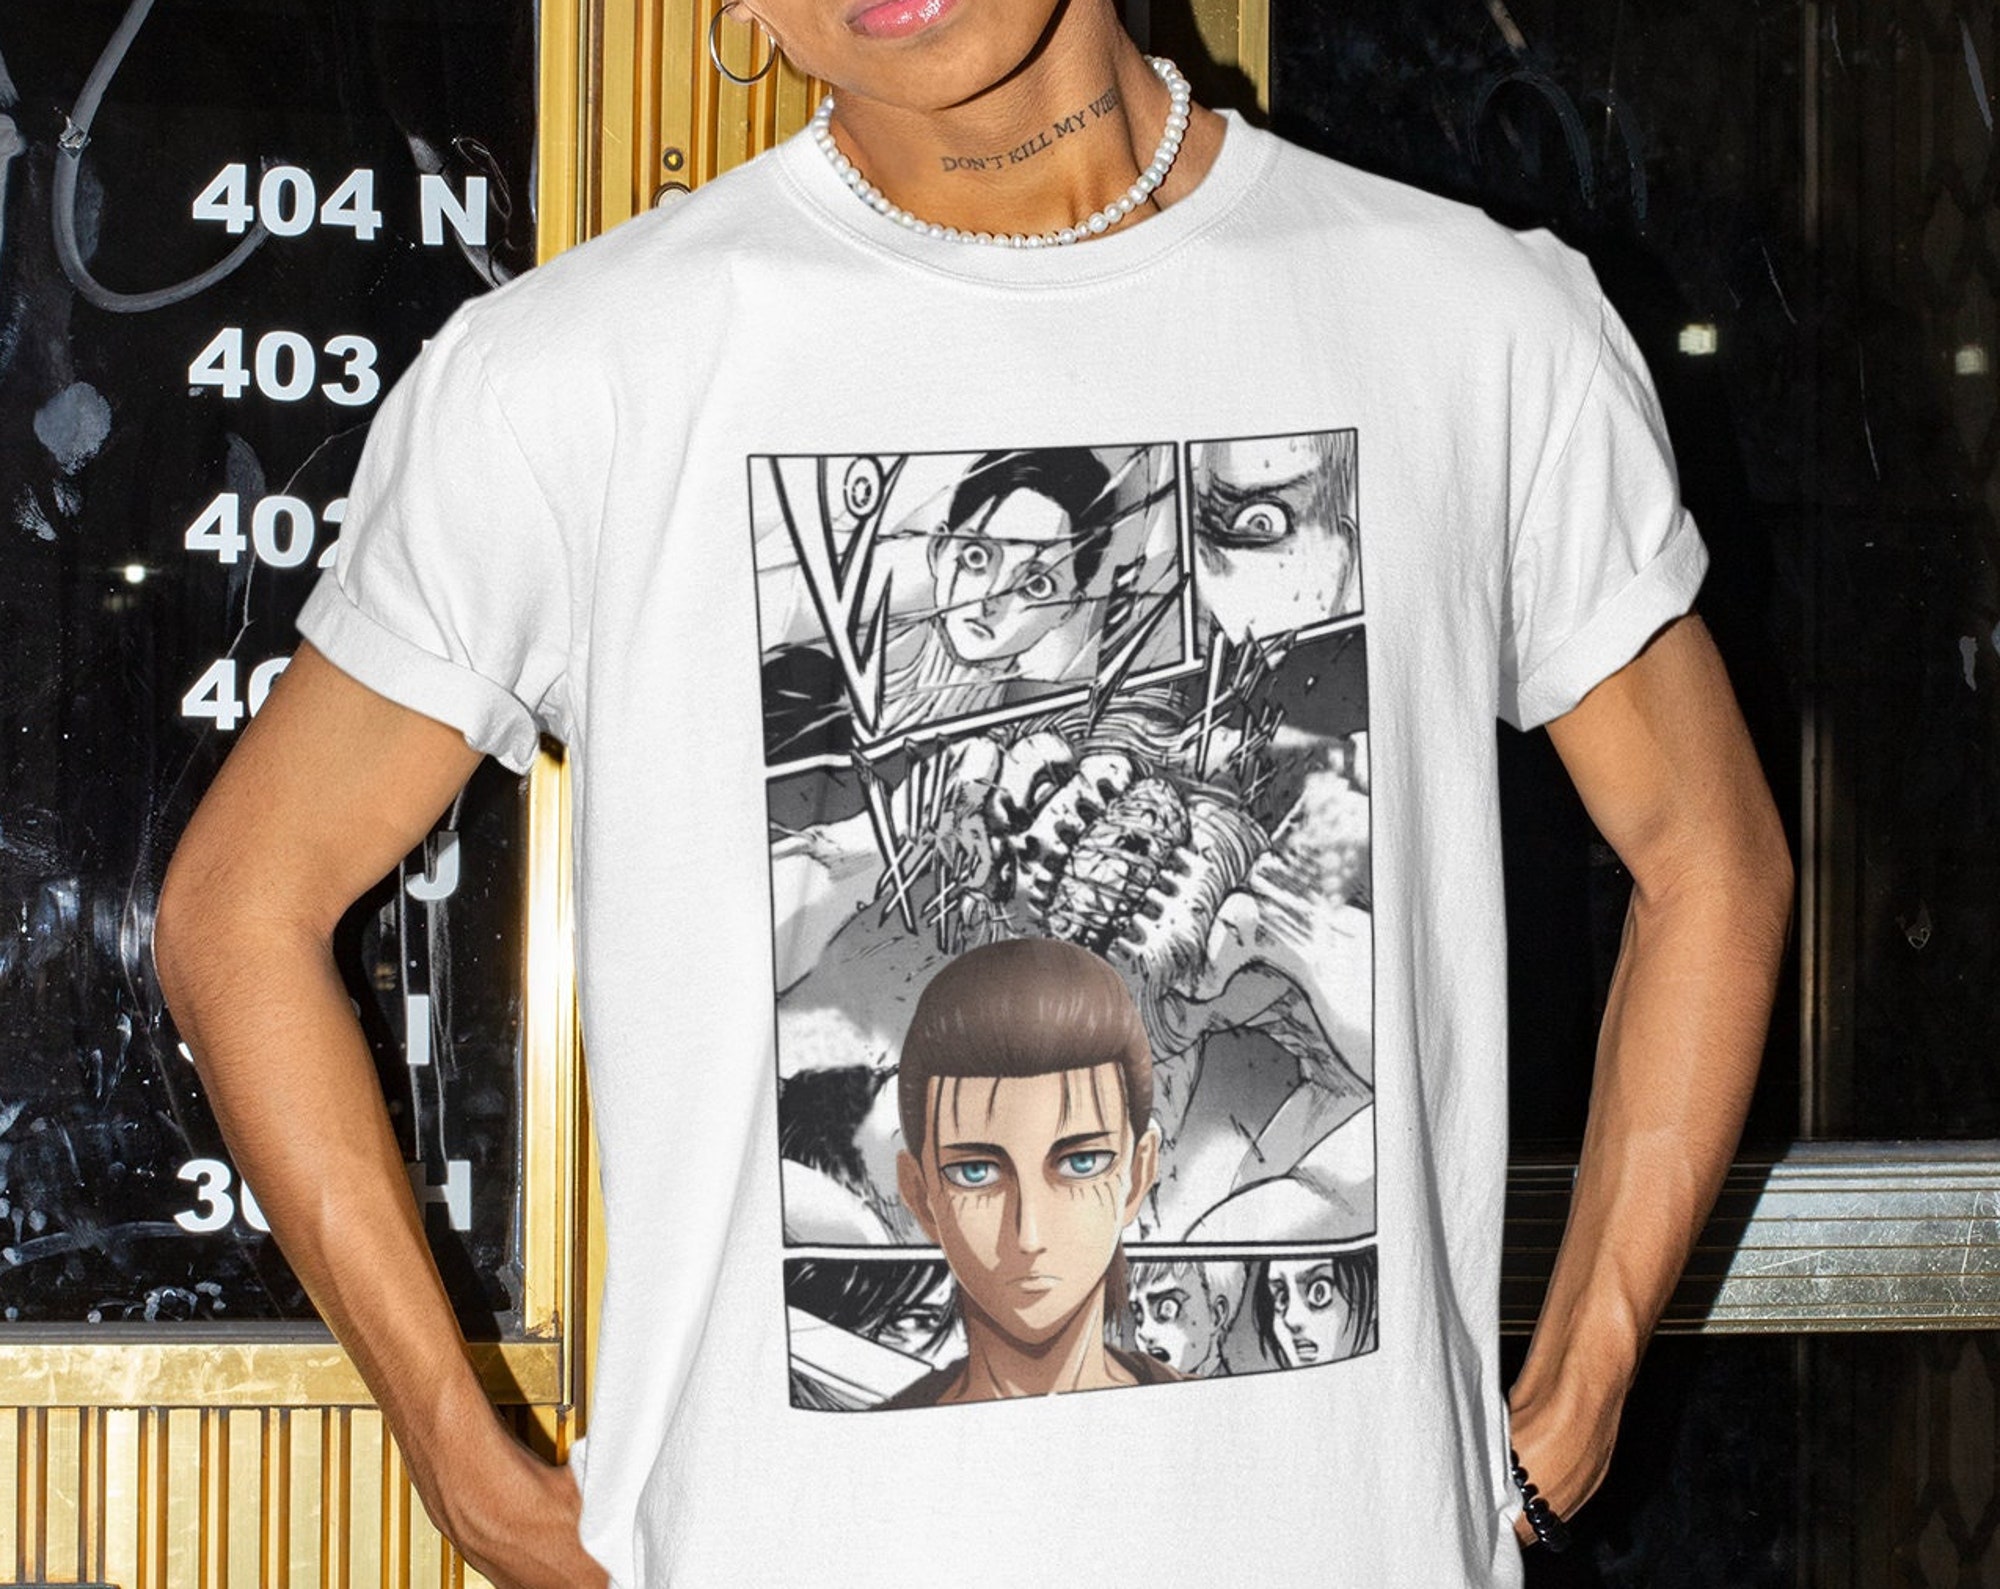 Discover Unisex Attack on Titan Shirt, Eren Yeager Shirt, Levi shirt, anime shirt